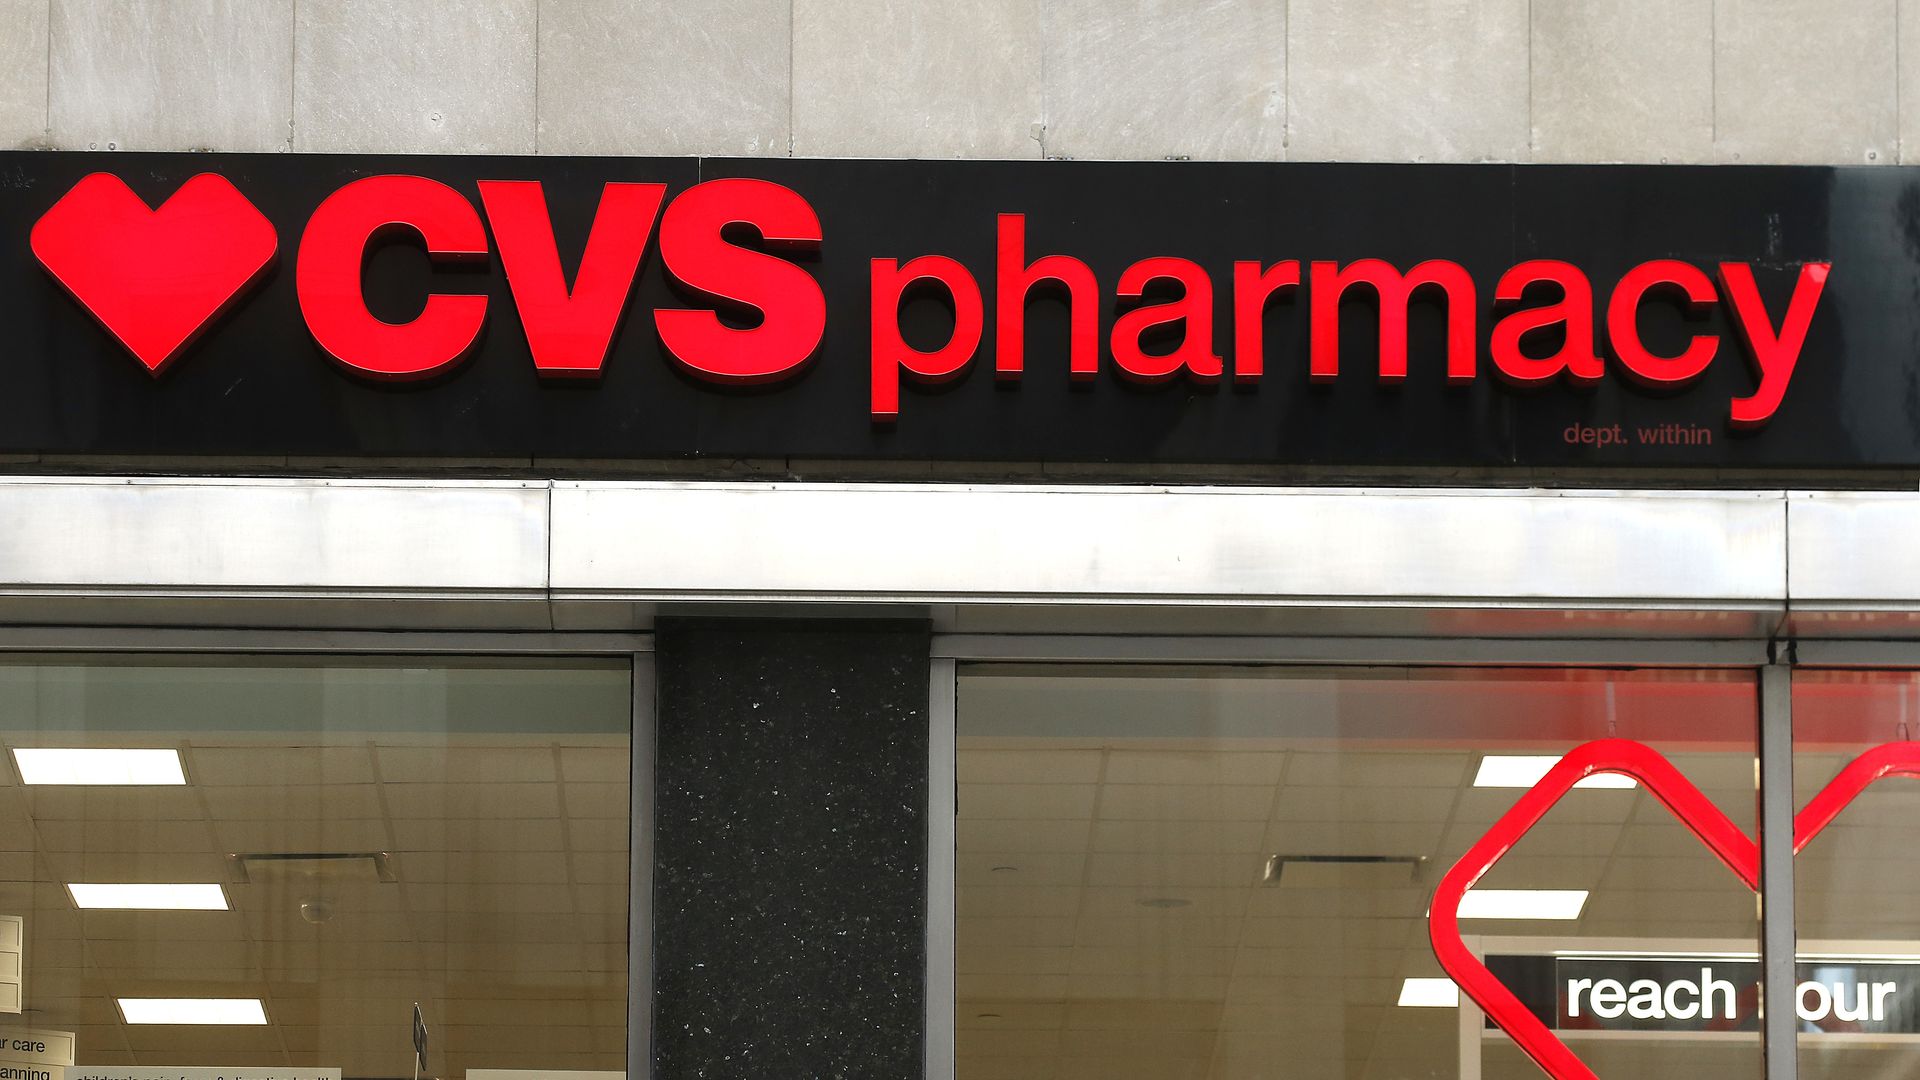 The red "CVS pharmacy" logo atop a CVS store.